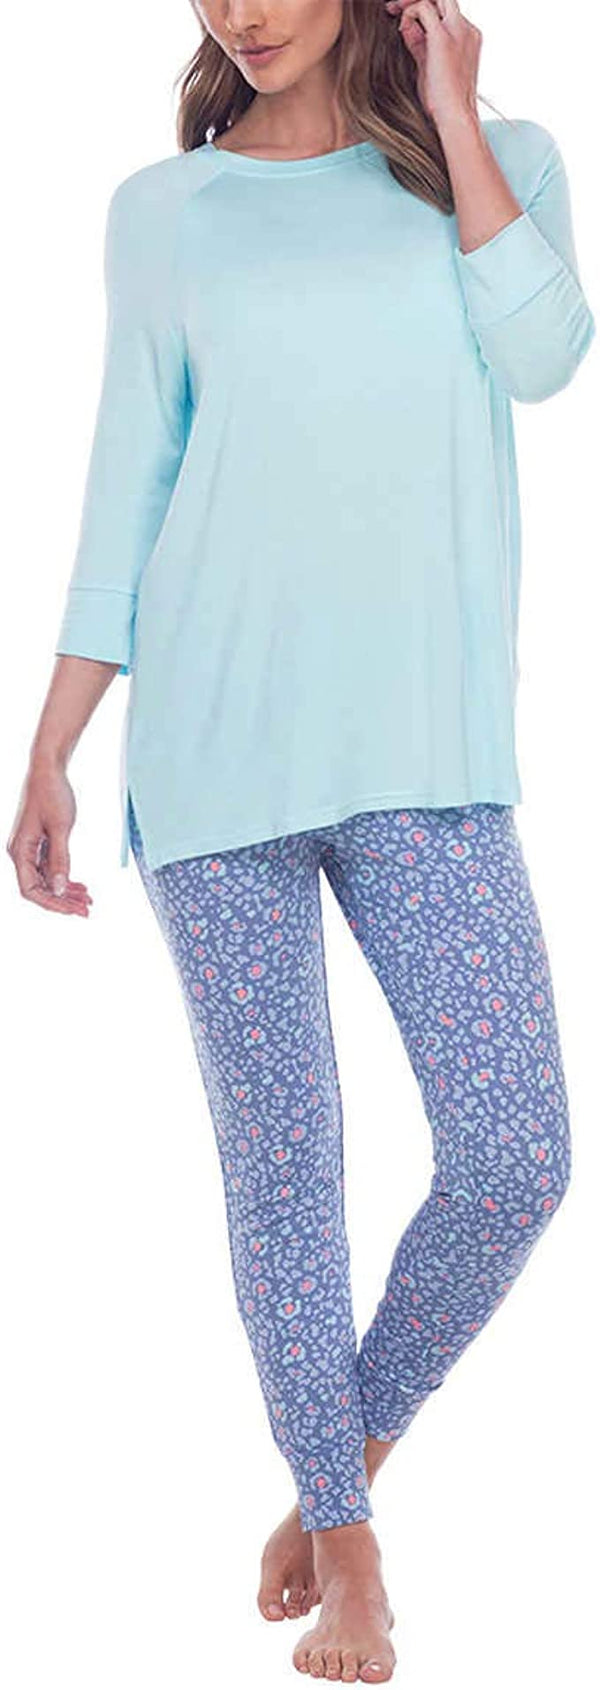 Honeydew Womens Solid Pajama Top,Aqua,X-Large